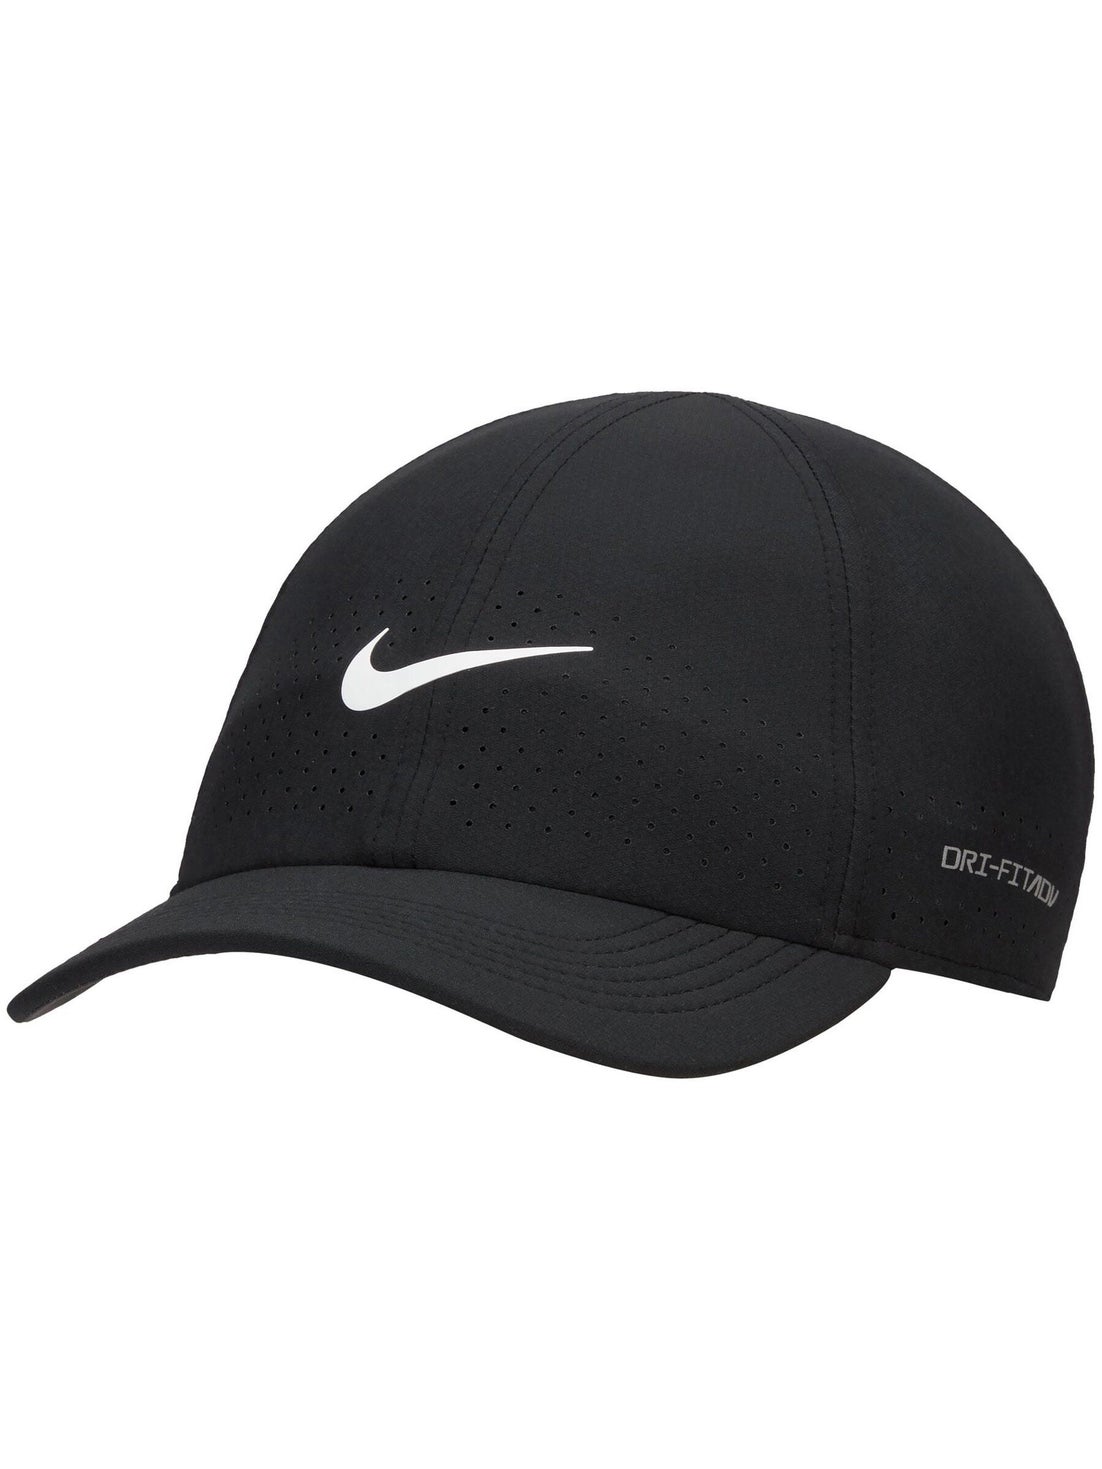 Nike Core Advantage Club Hat | Tennis Warehouse